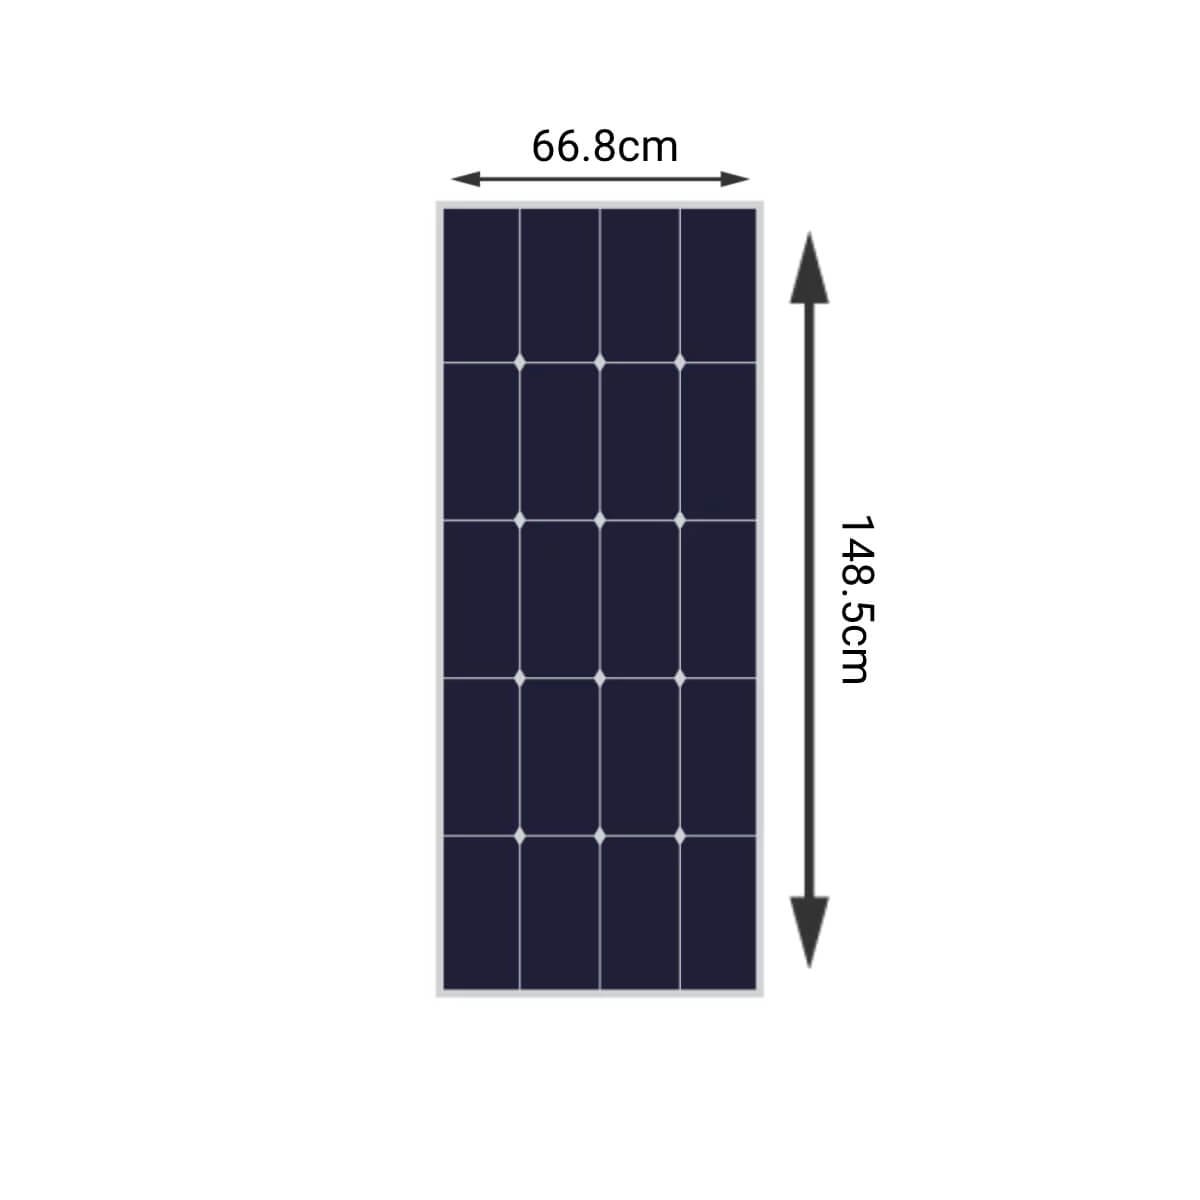 175W Solar Panel Kit – 1x 175W dimensions